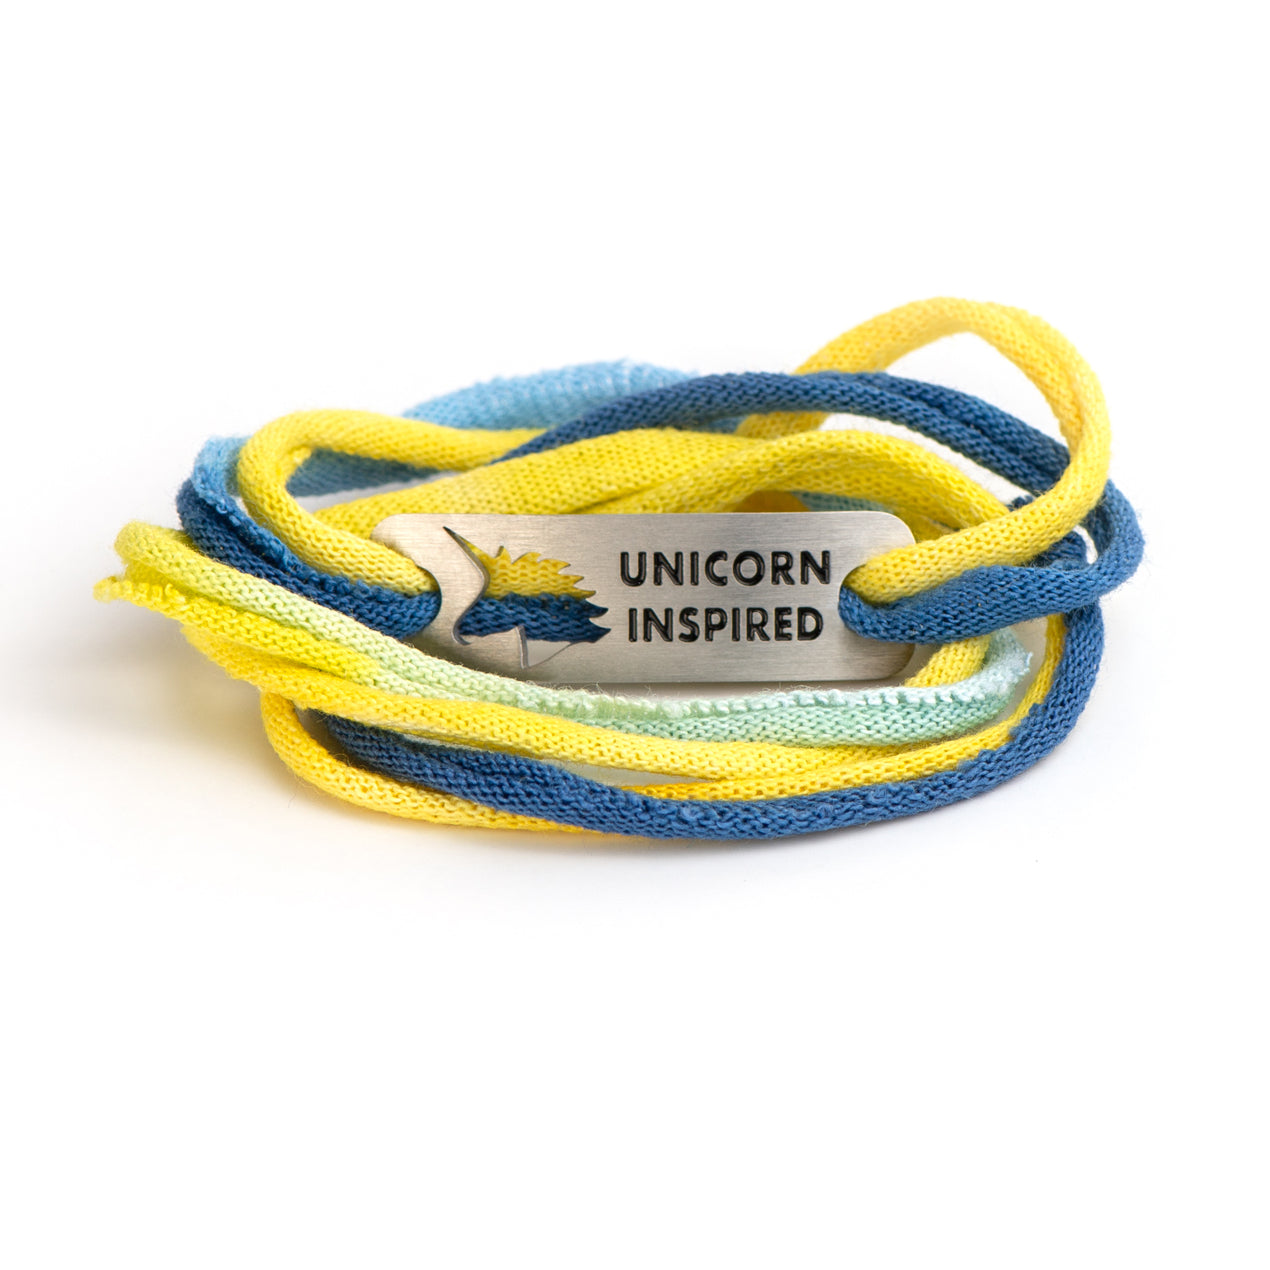 Run Boston and Unicorn Inspired - Blue/Yellow Jersey Wrap Bracelet Run Boston